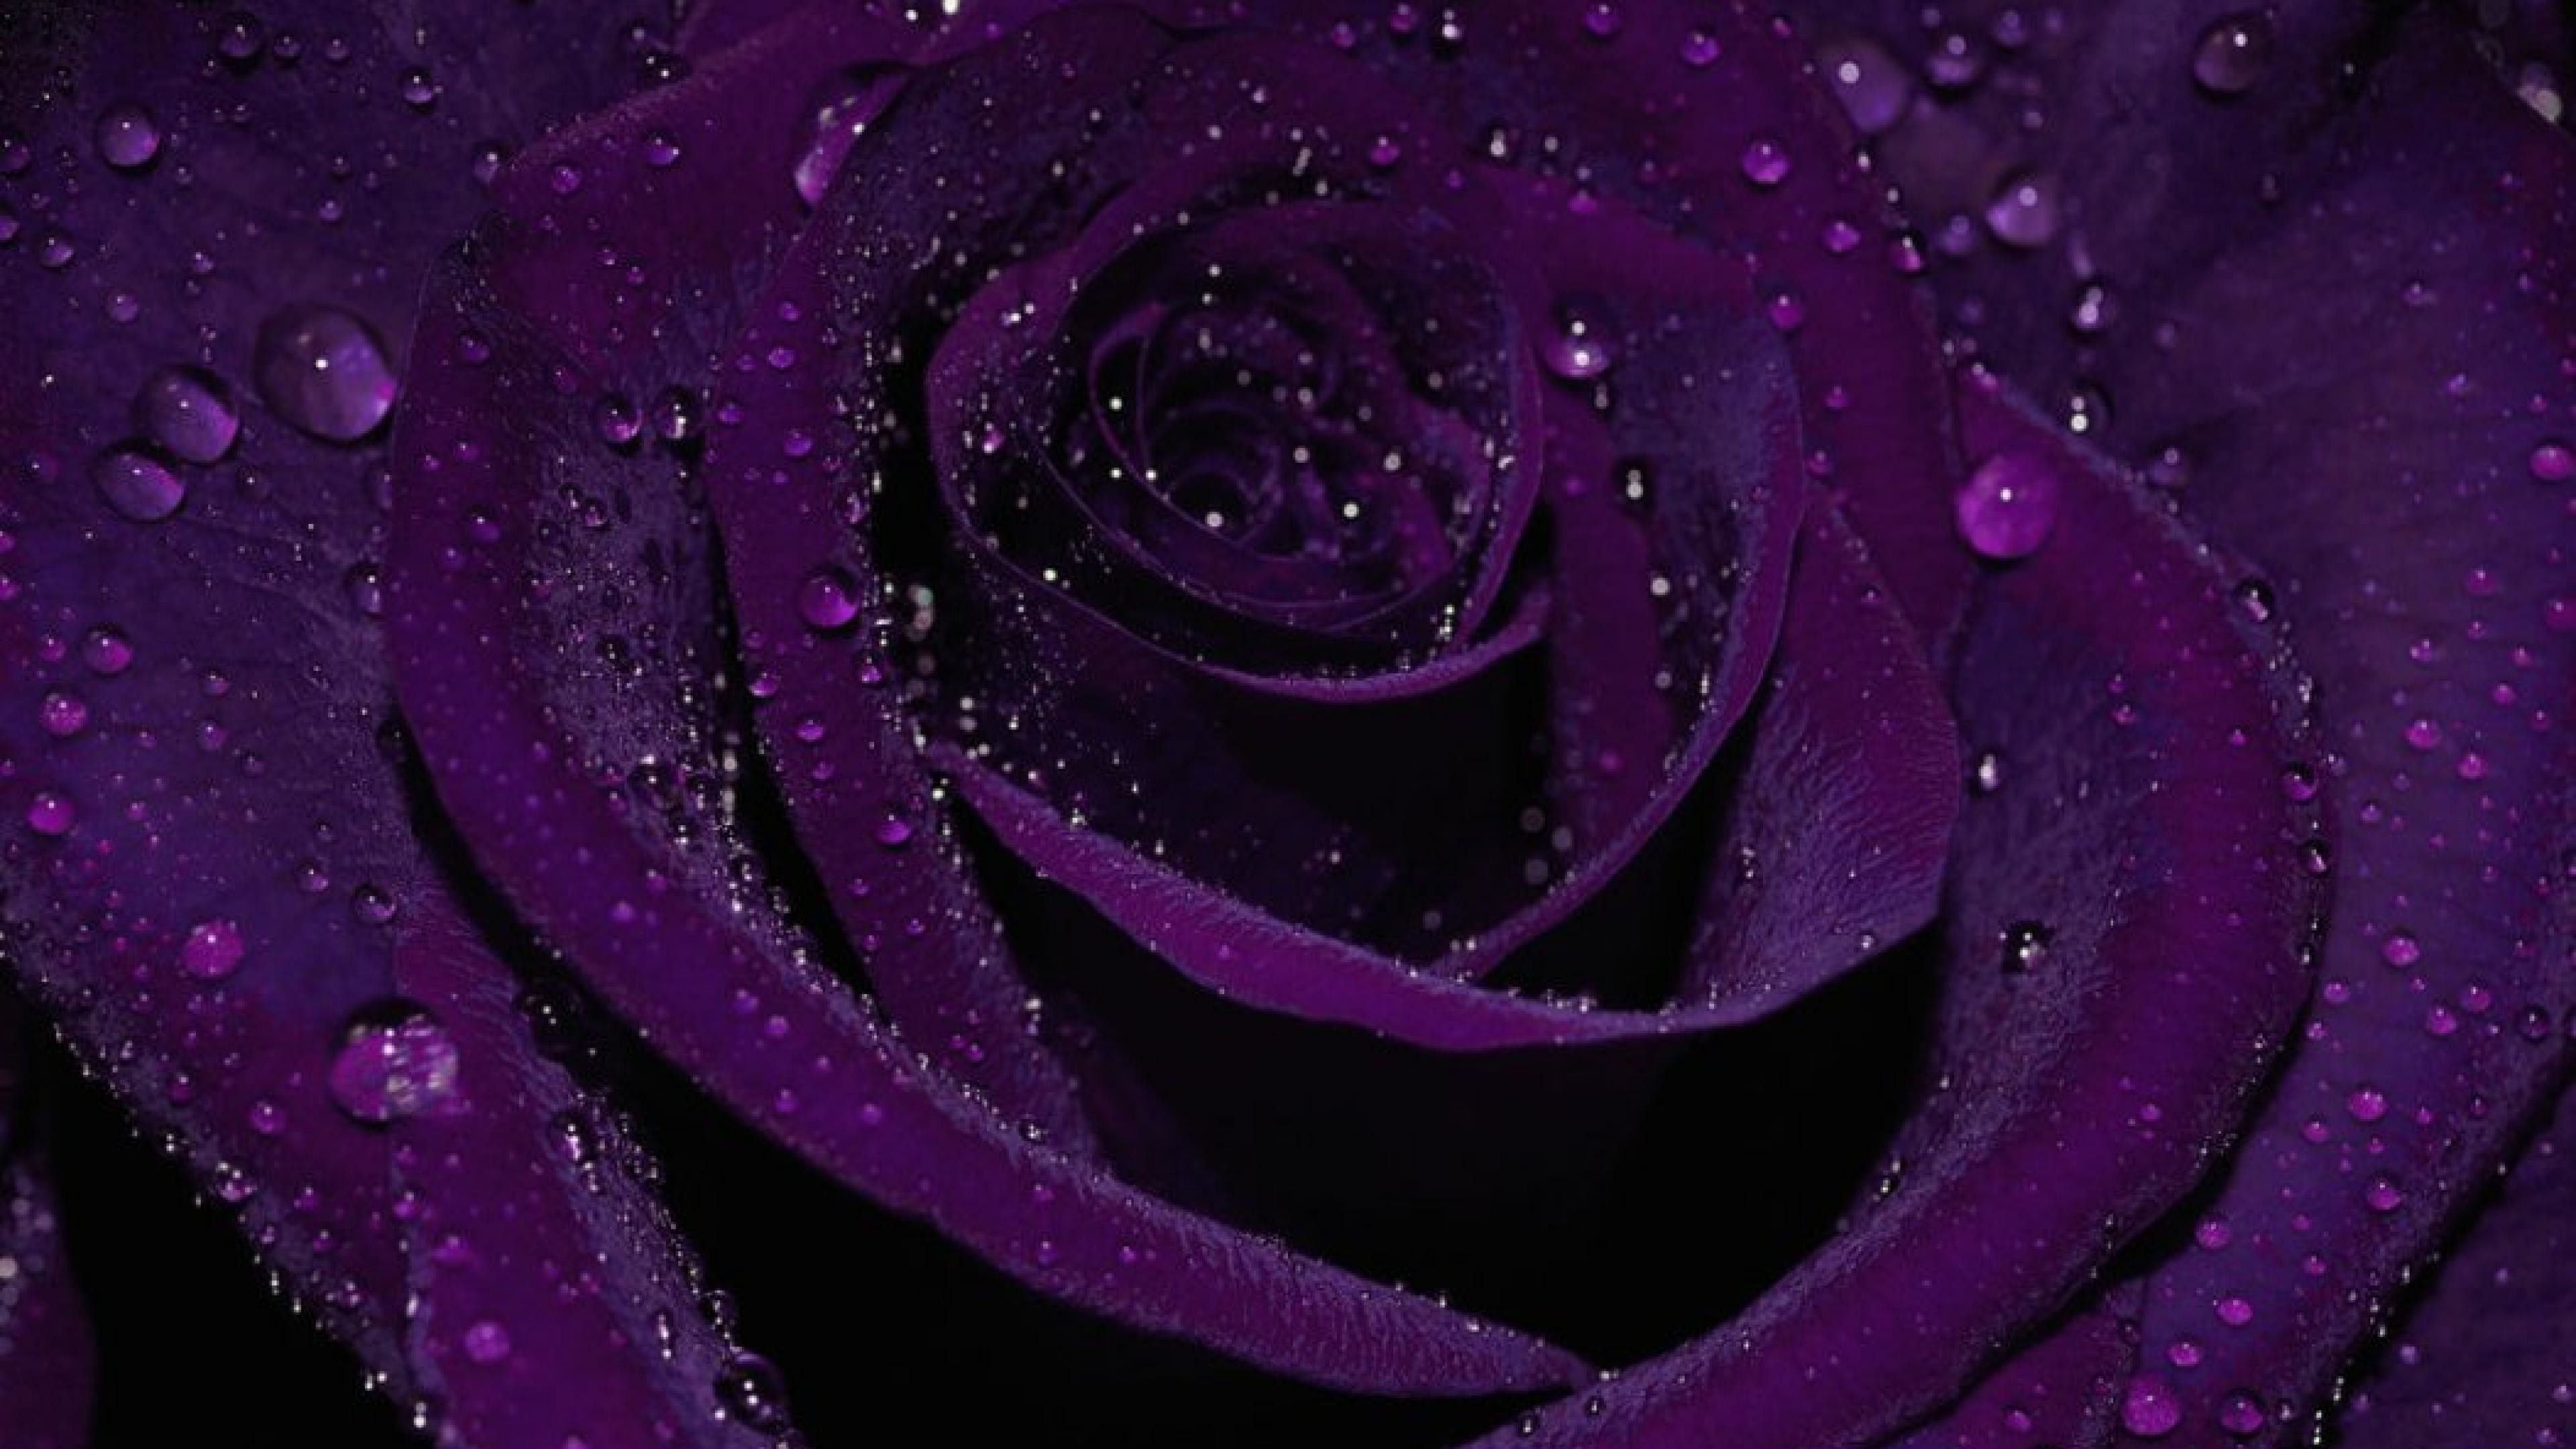 Purple Rose HD Wallpapers  HD Wallpapers  ID 32626